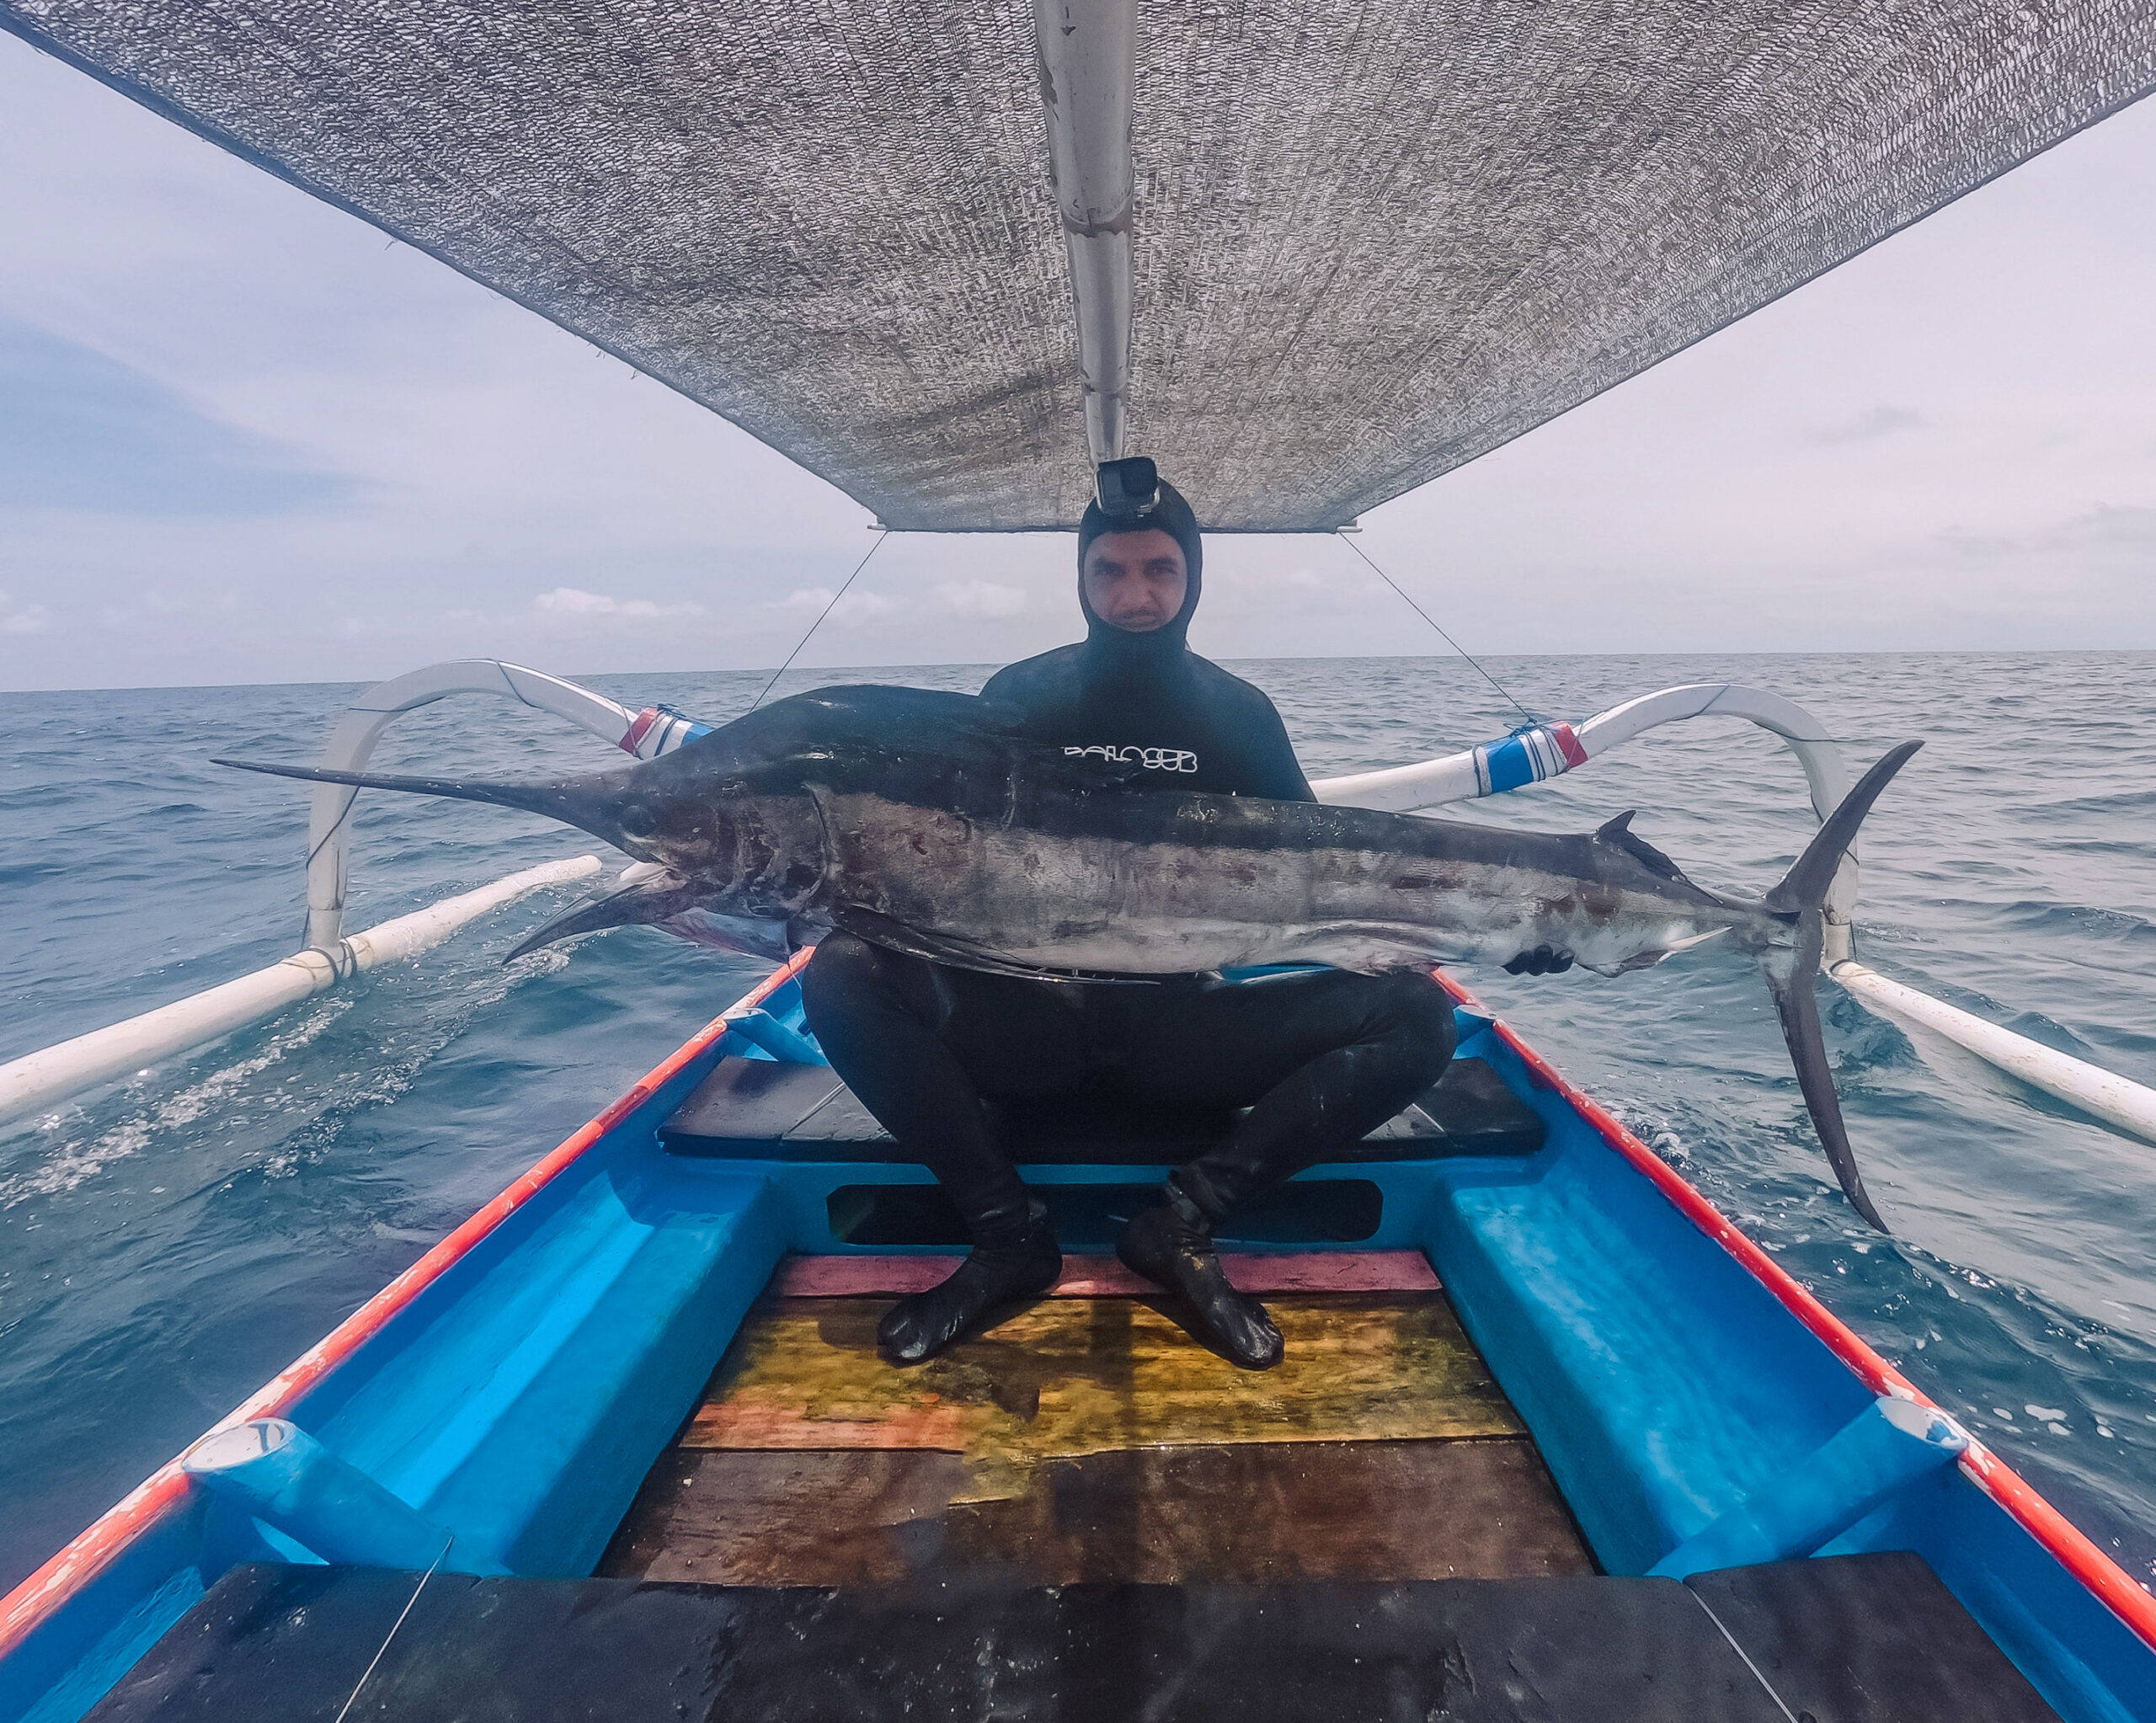 Black Marlin Spearfishing